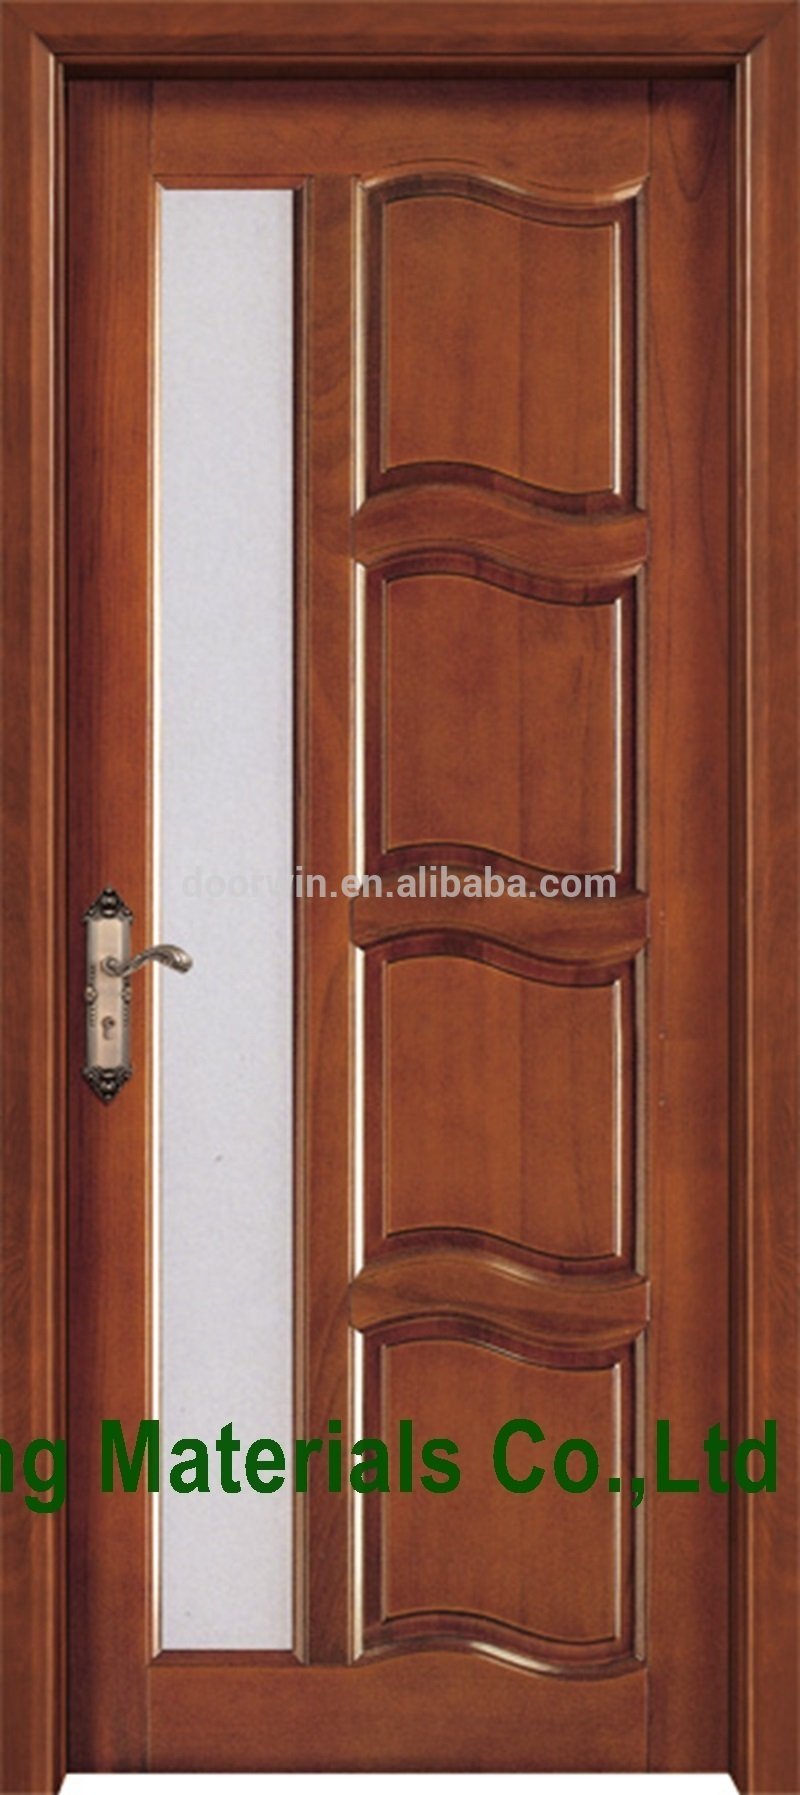 Best ideas about Cheap Bedroom Doors
. Save or Pin Lowes Solid Wood Door handballtunisie Now.